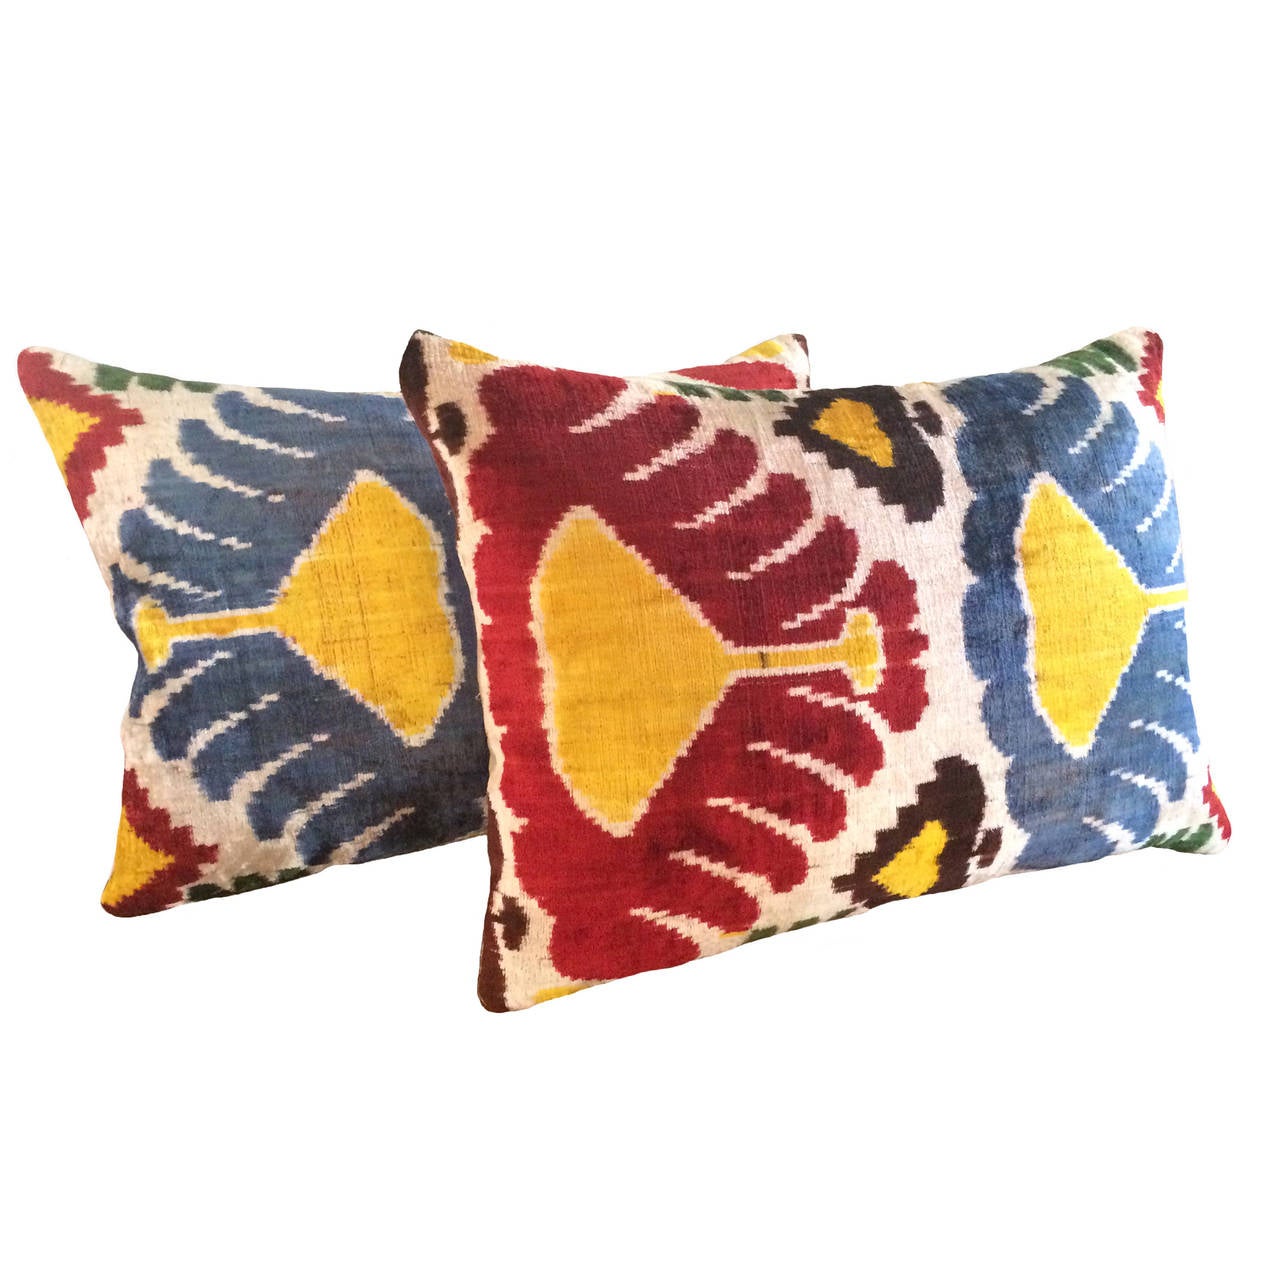 Pair of custom flamme silk velvet ikat down pillows; red, blue, yellow on ivory ground, 19th century.